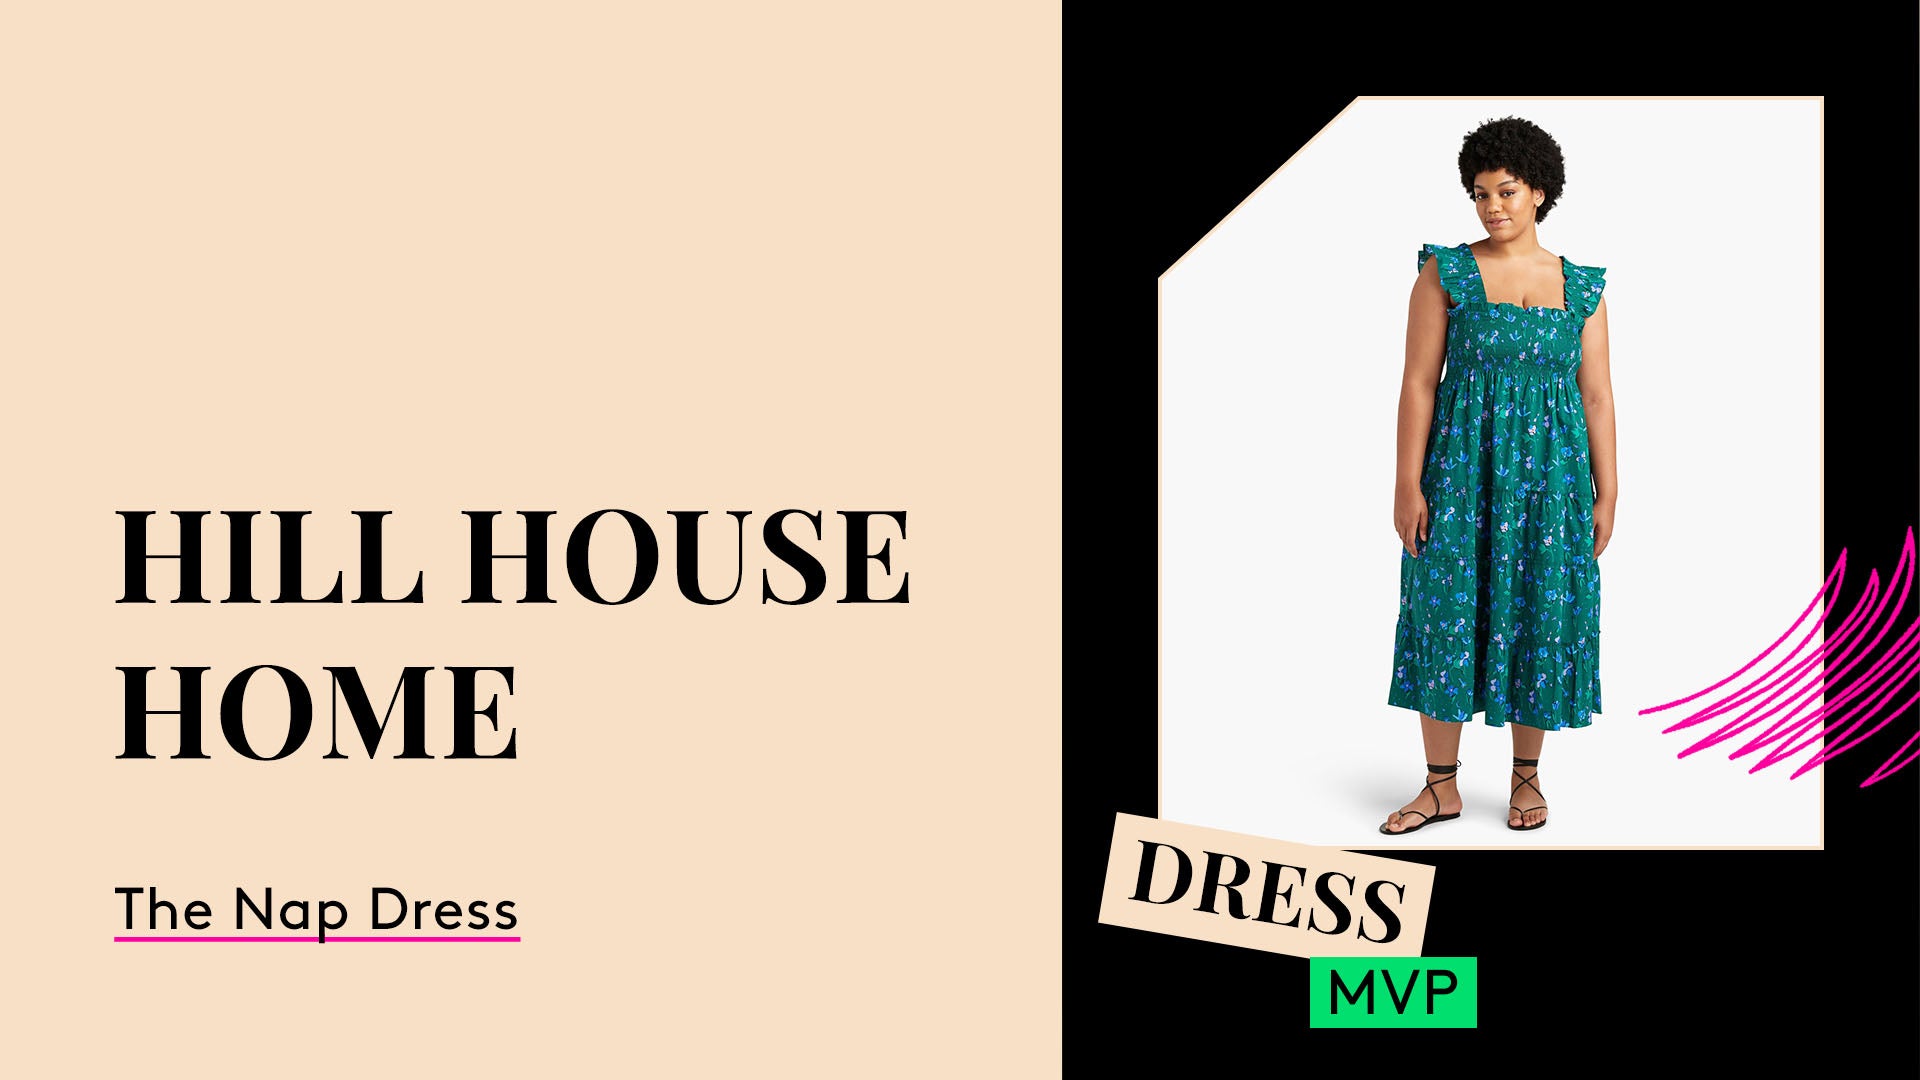 Dress MVP. Hill House Home The Nap Dress.